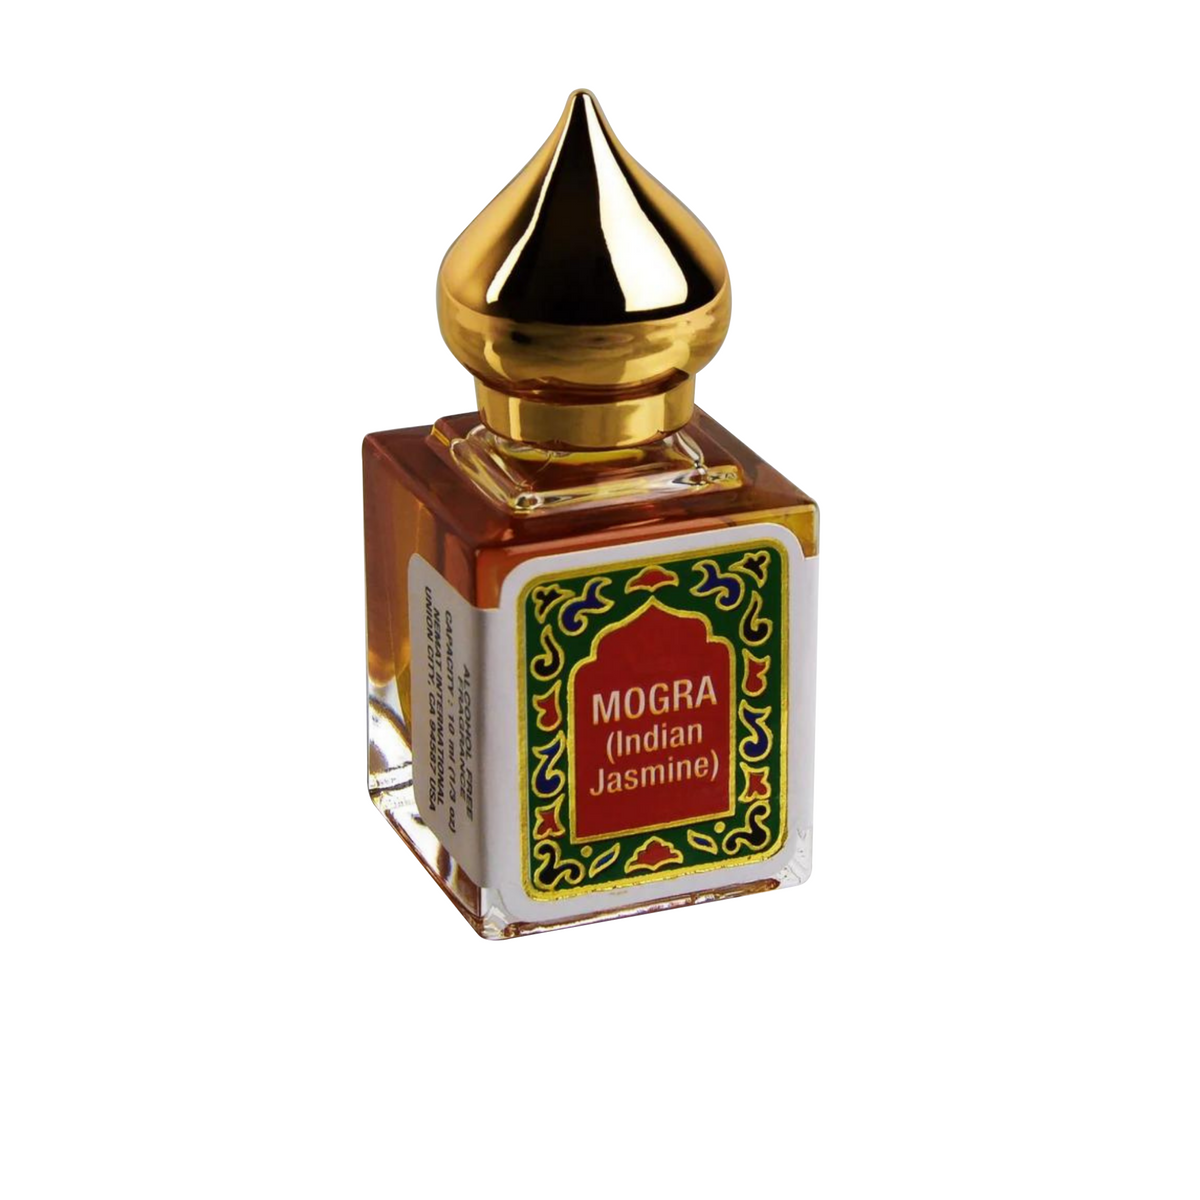 Primary image of Mogra (Indian Jasmine) Fragrance Minaret Cap